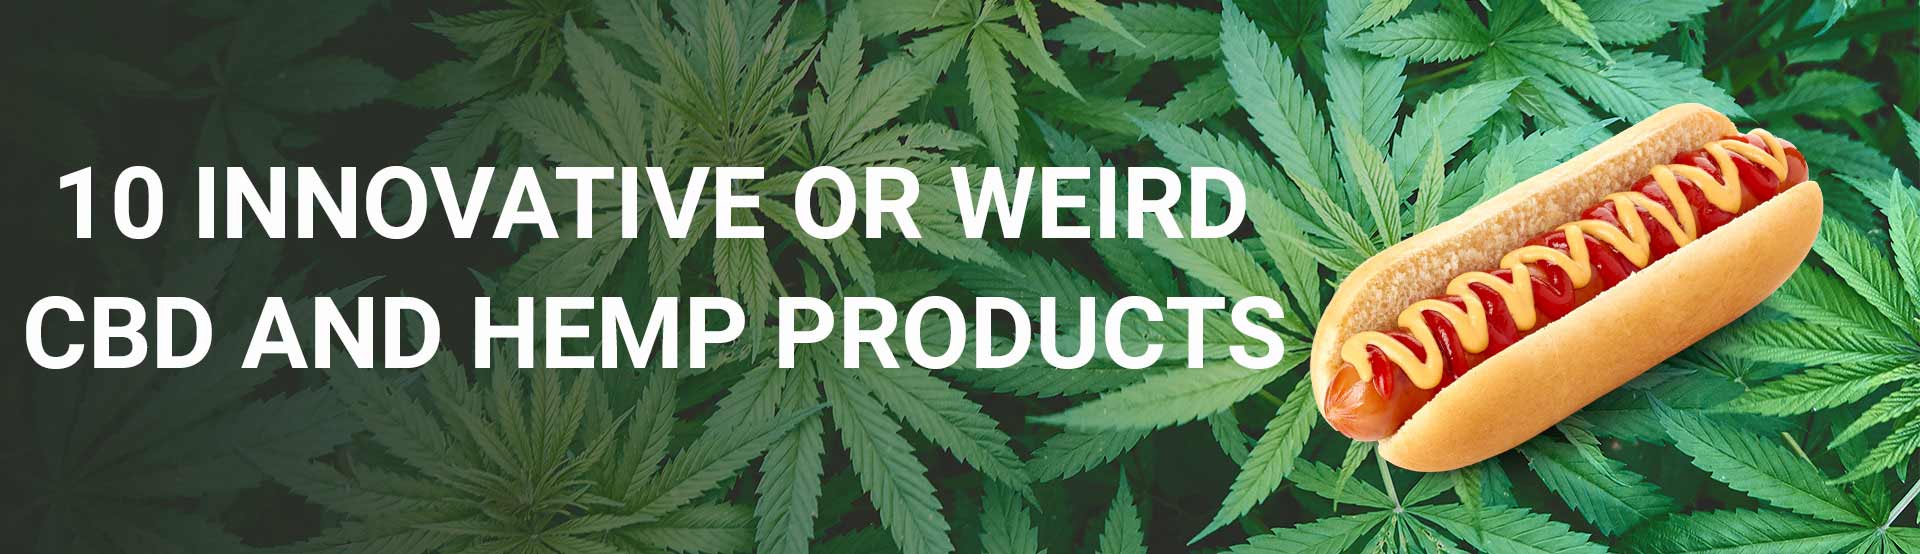 10 Innovative and weird CBD and hemp products - Hero Image